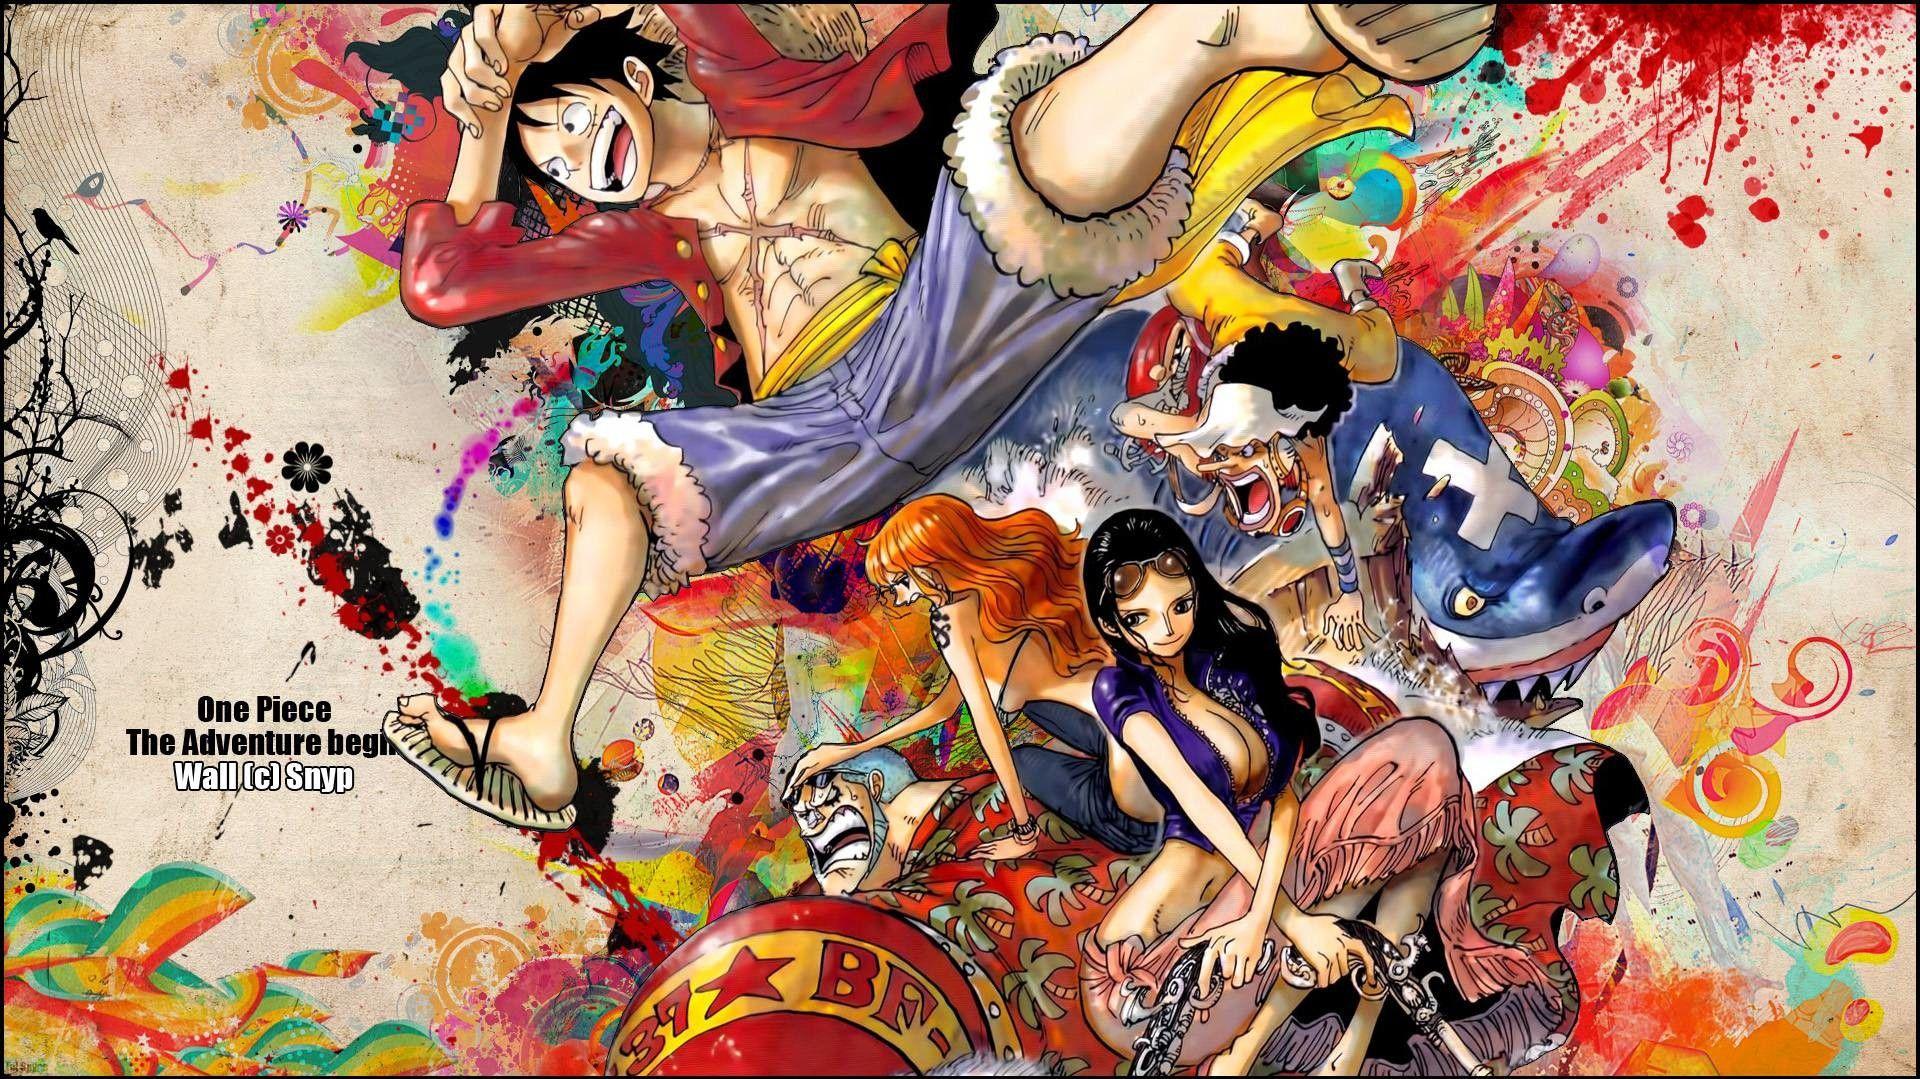 One Piece Trafalgar Law Wallpaper For Mac Cartoons Image